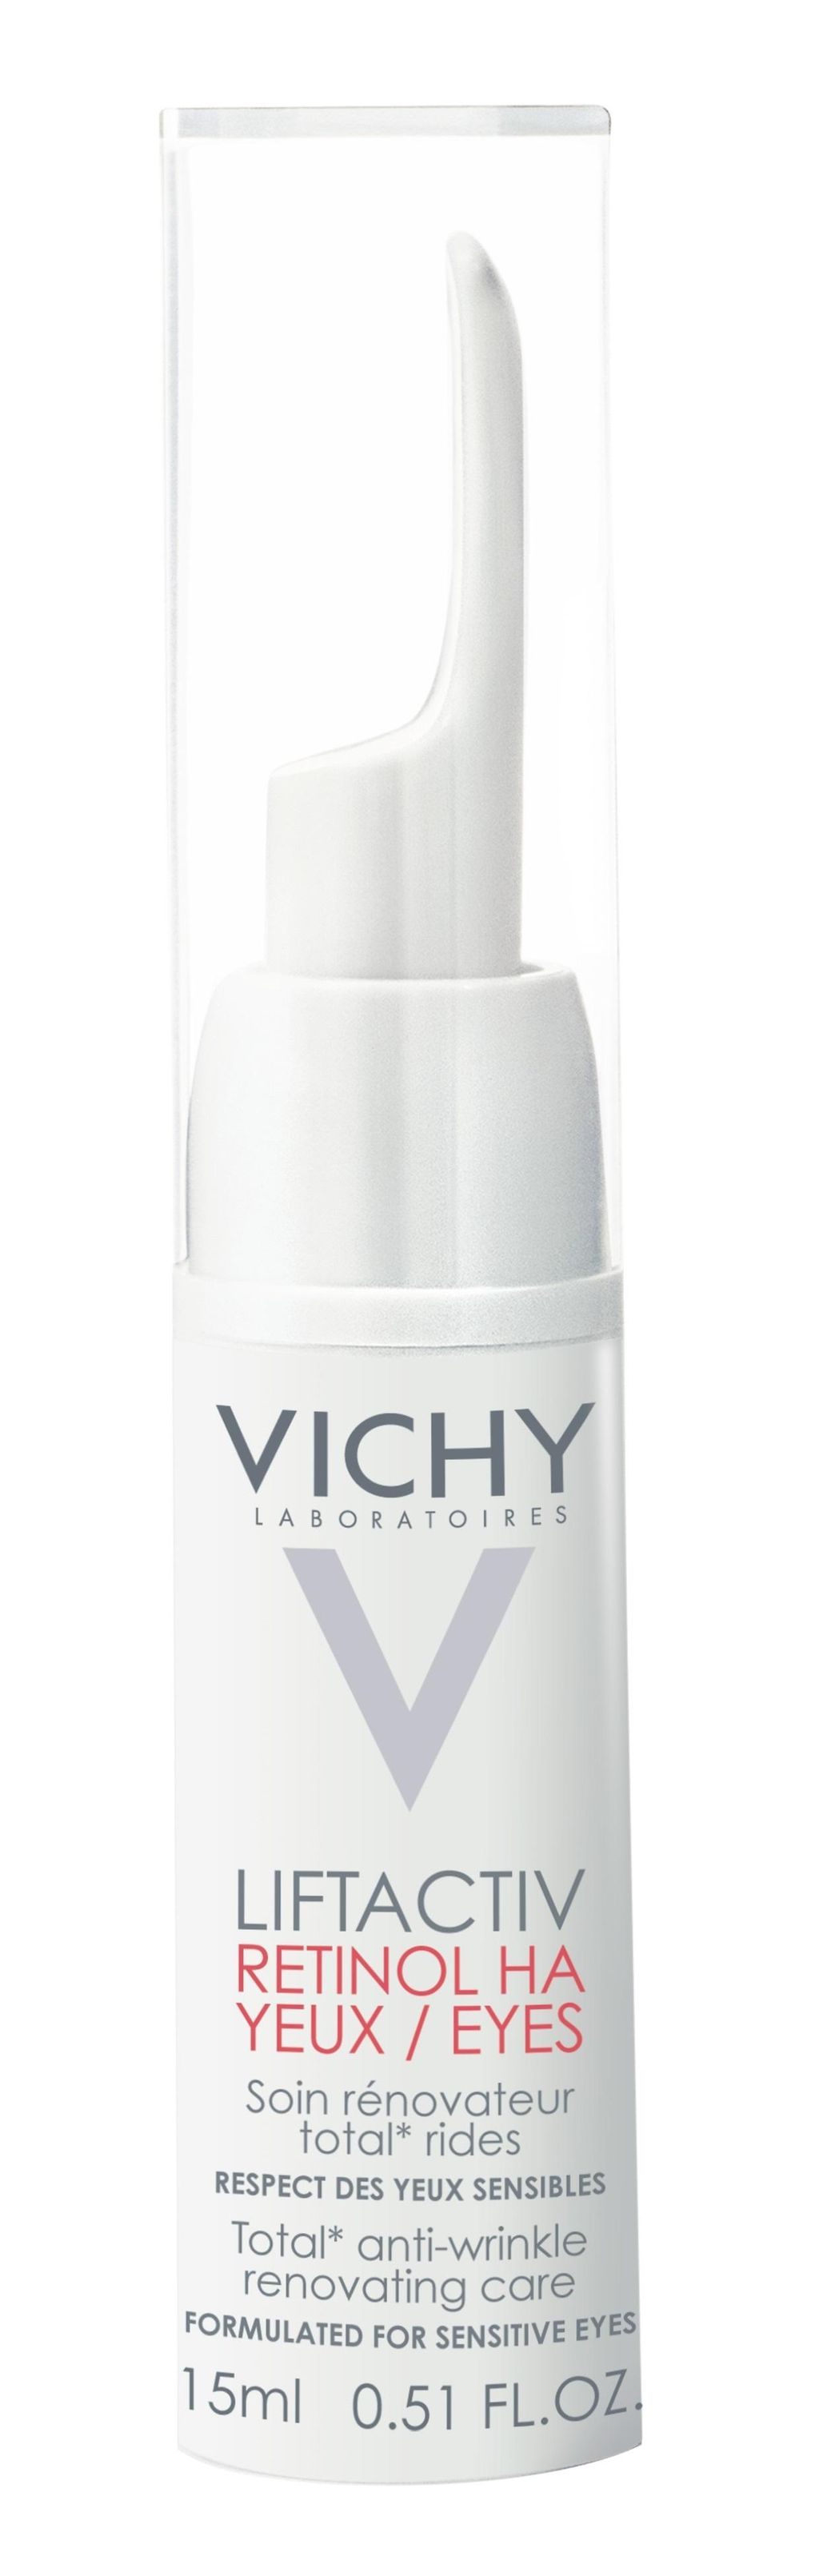 фото упаковки Vichy Liftactiv Retinol НА крем для контура глаз